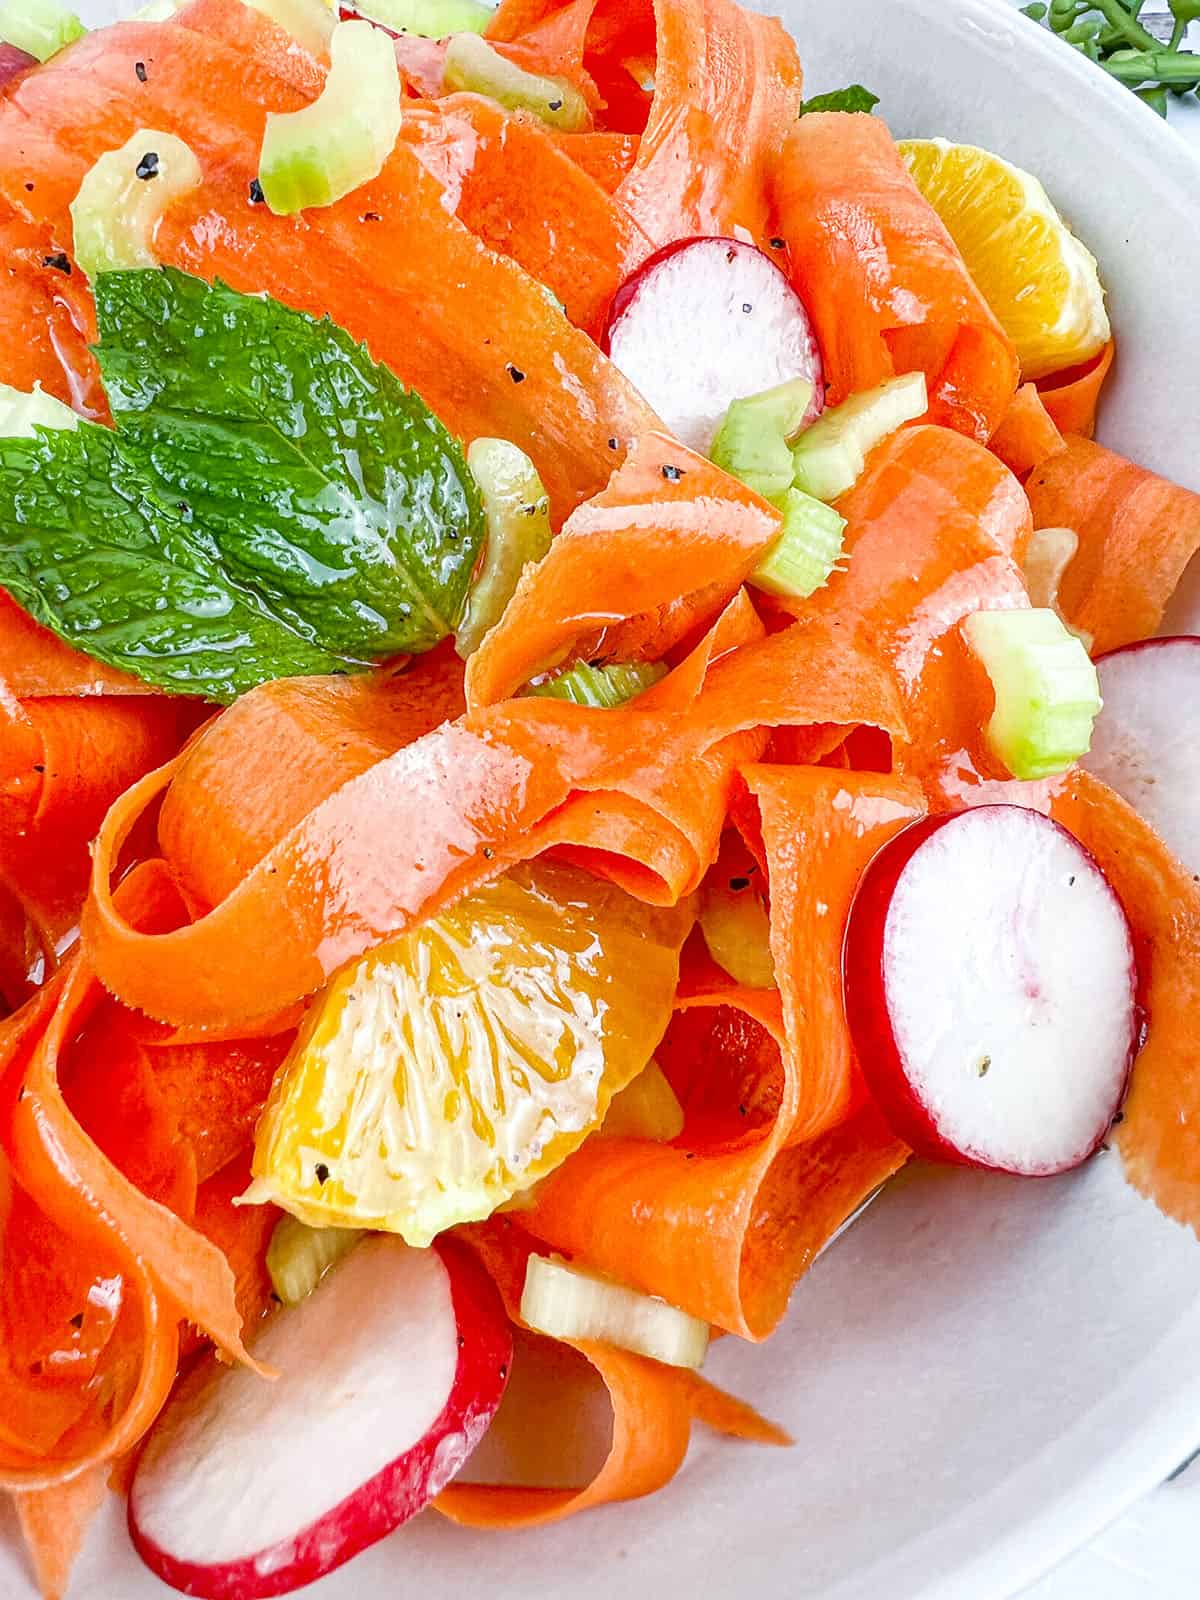 A macro look at the salad showing orange segments, carrots and radishes closeup.